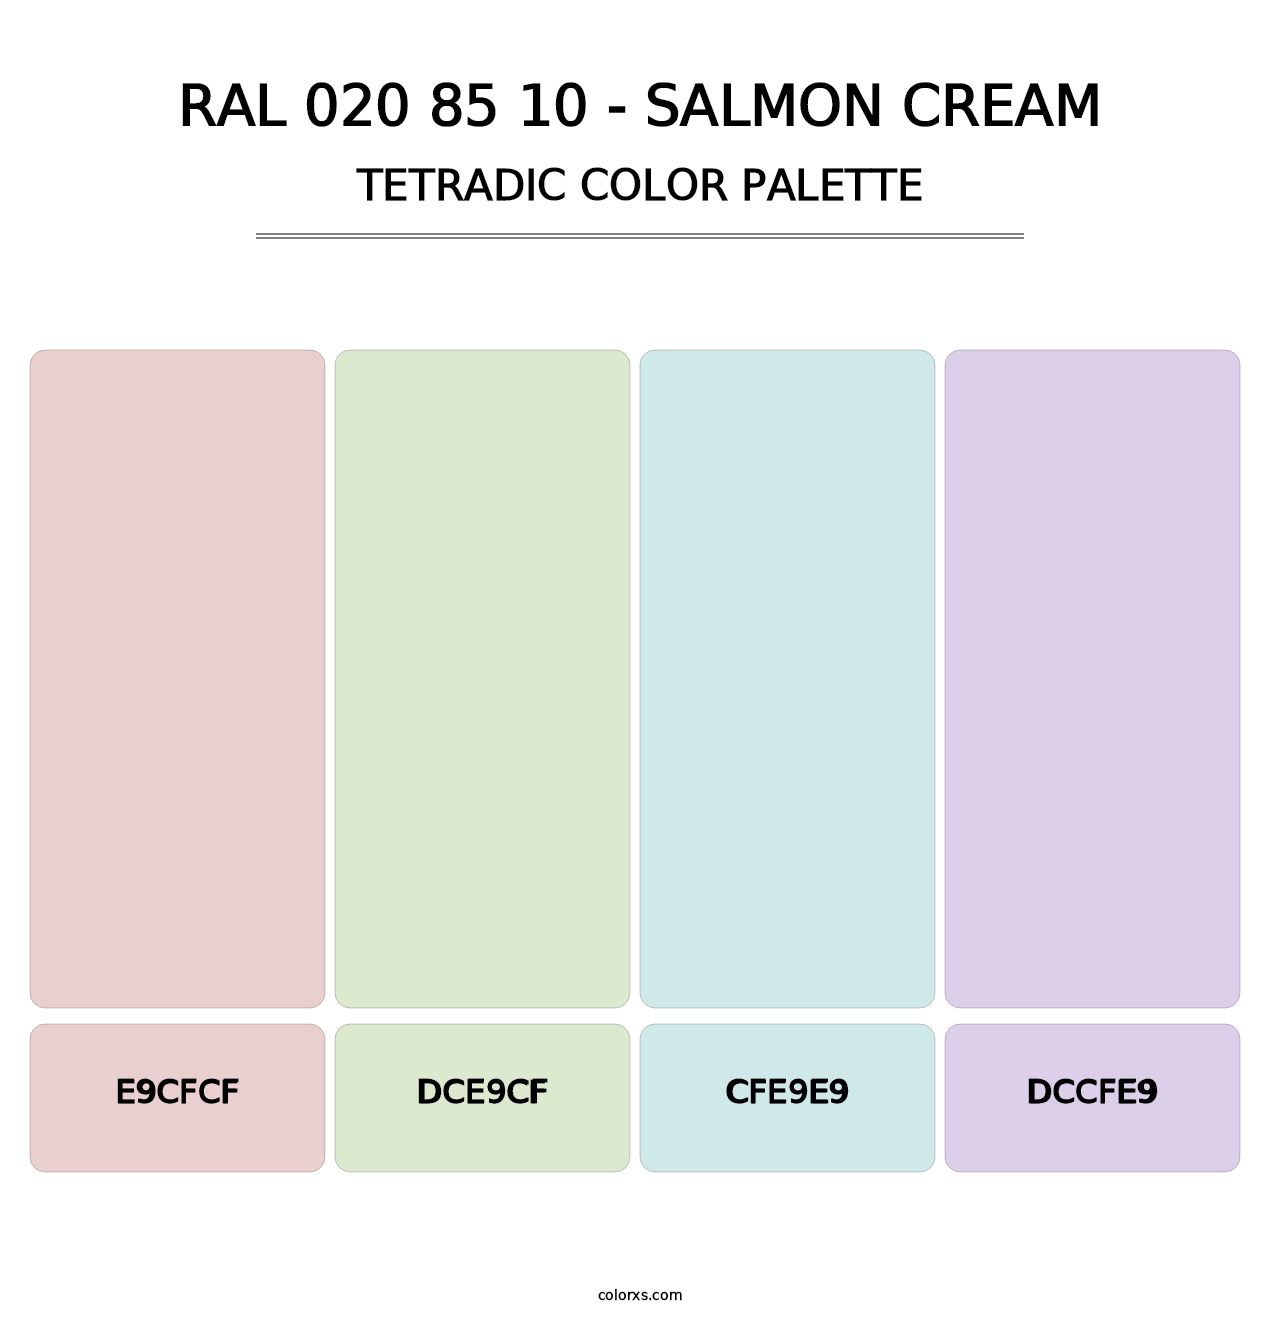 RAL 020 85 10 - Salmon Cream - Tetradic Color Palette